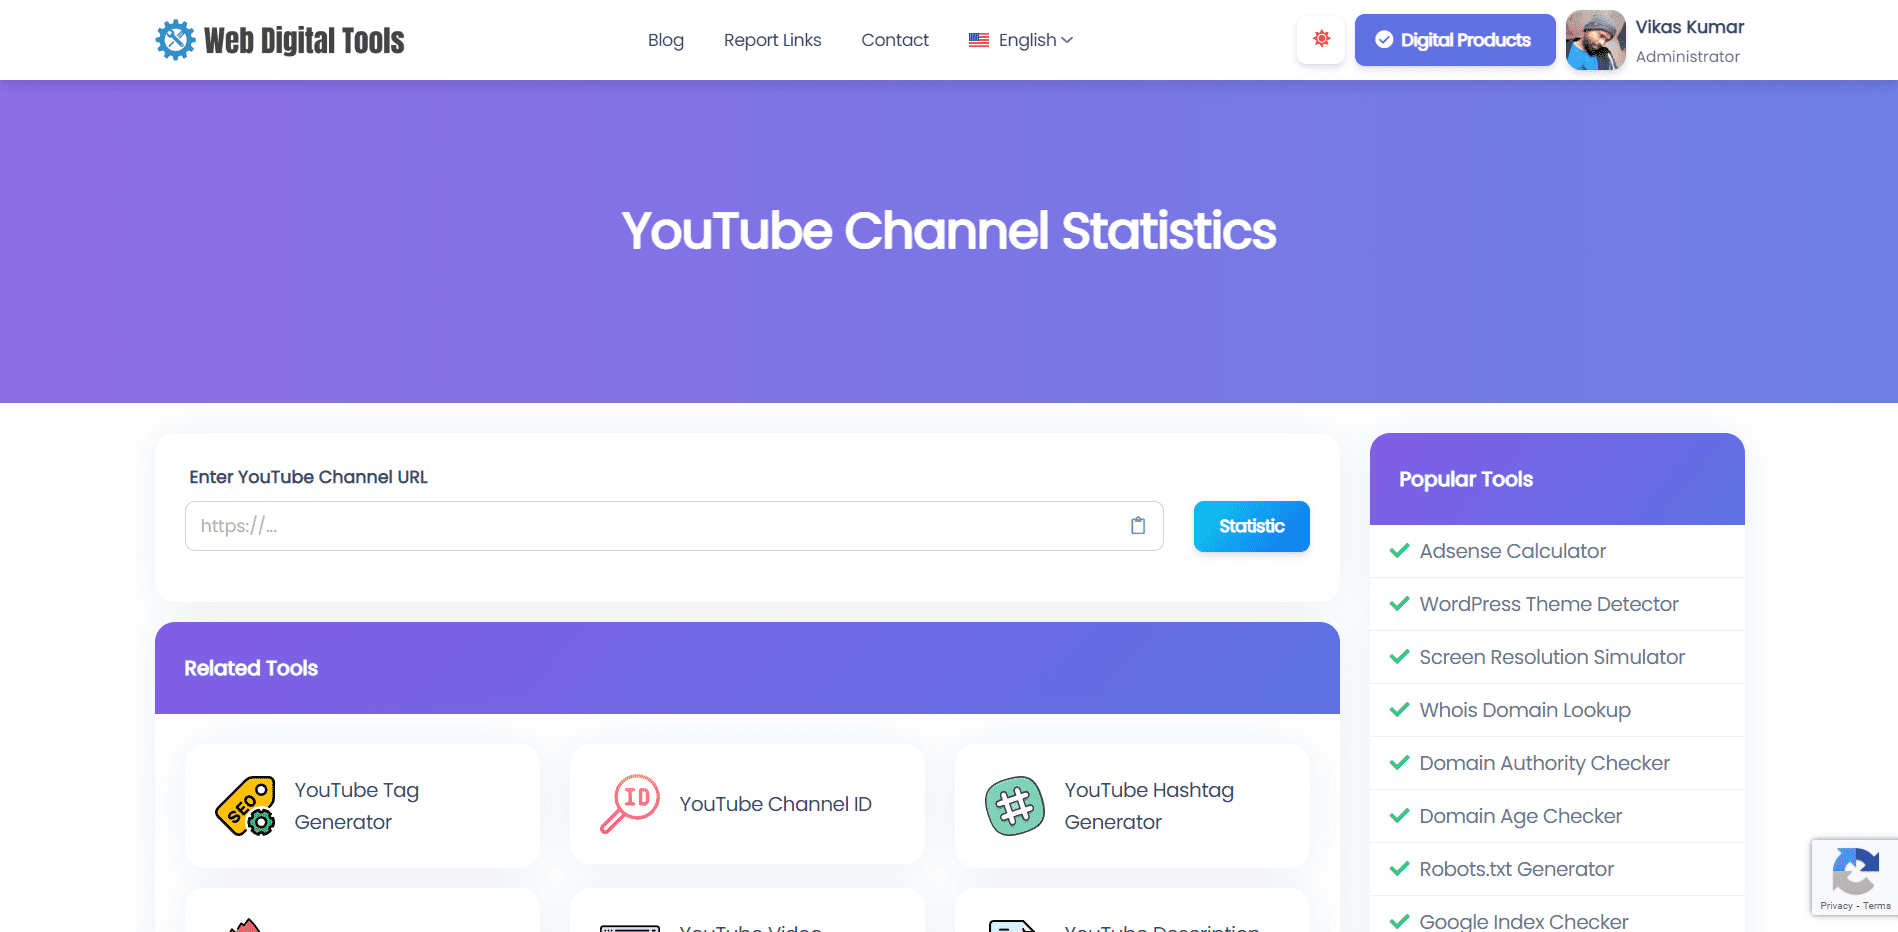 YouTube Channel Statistics